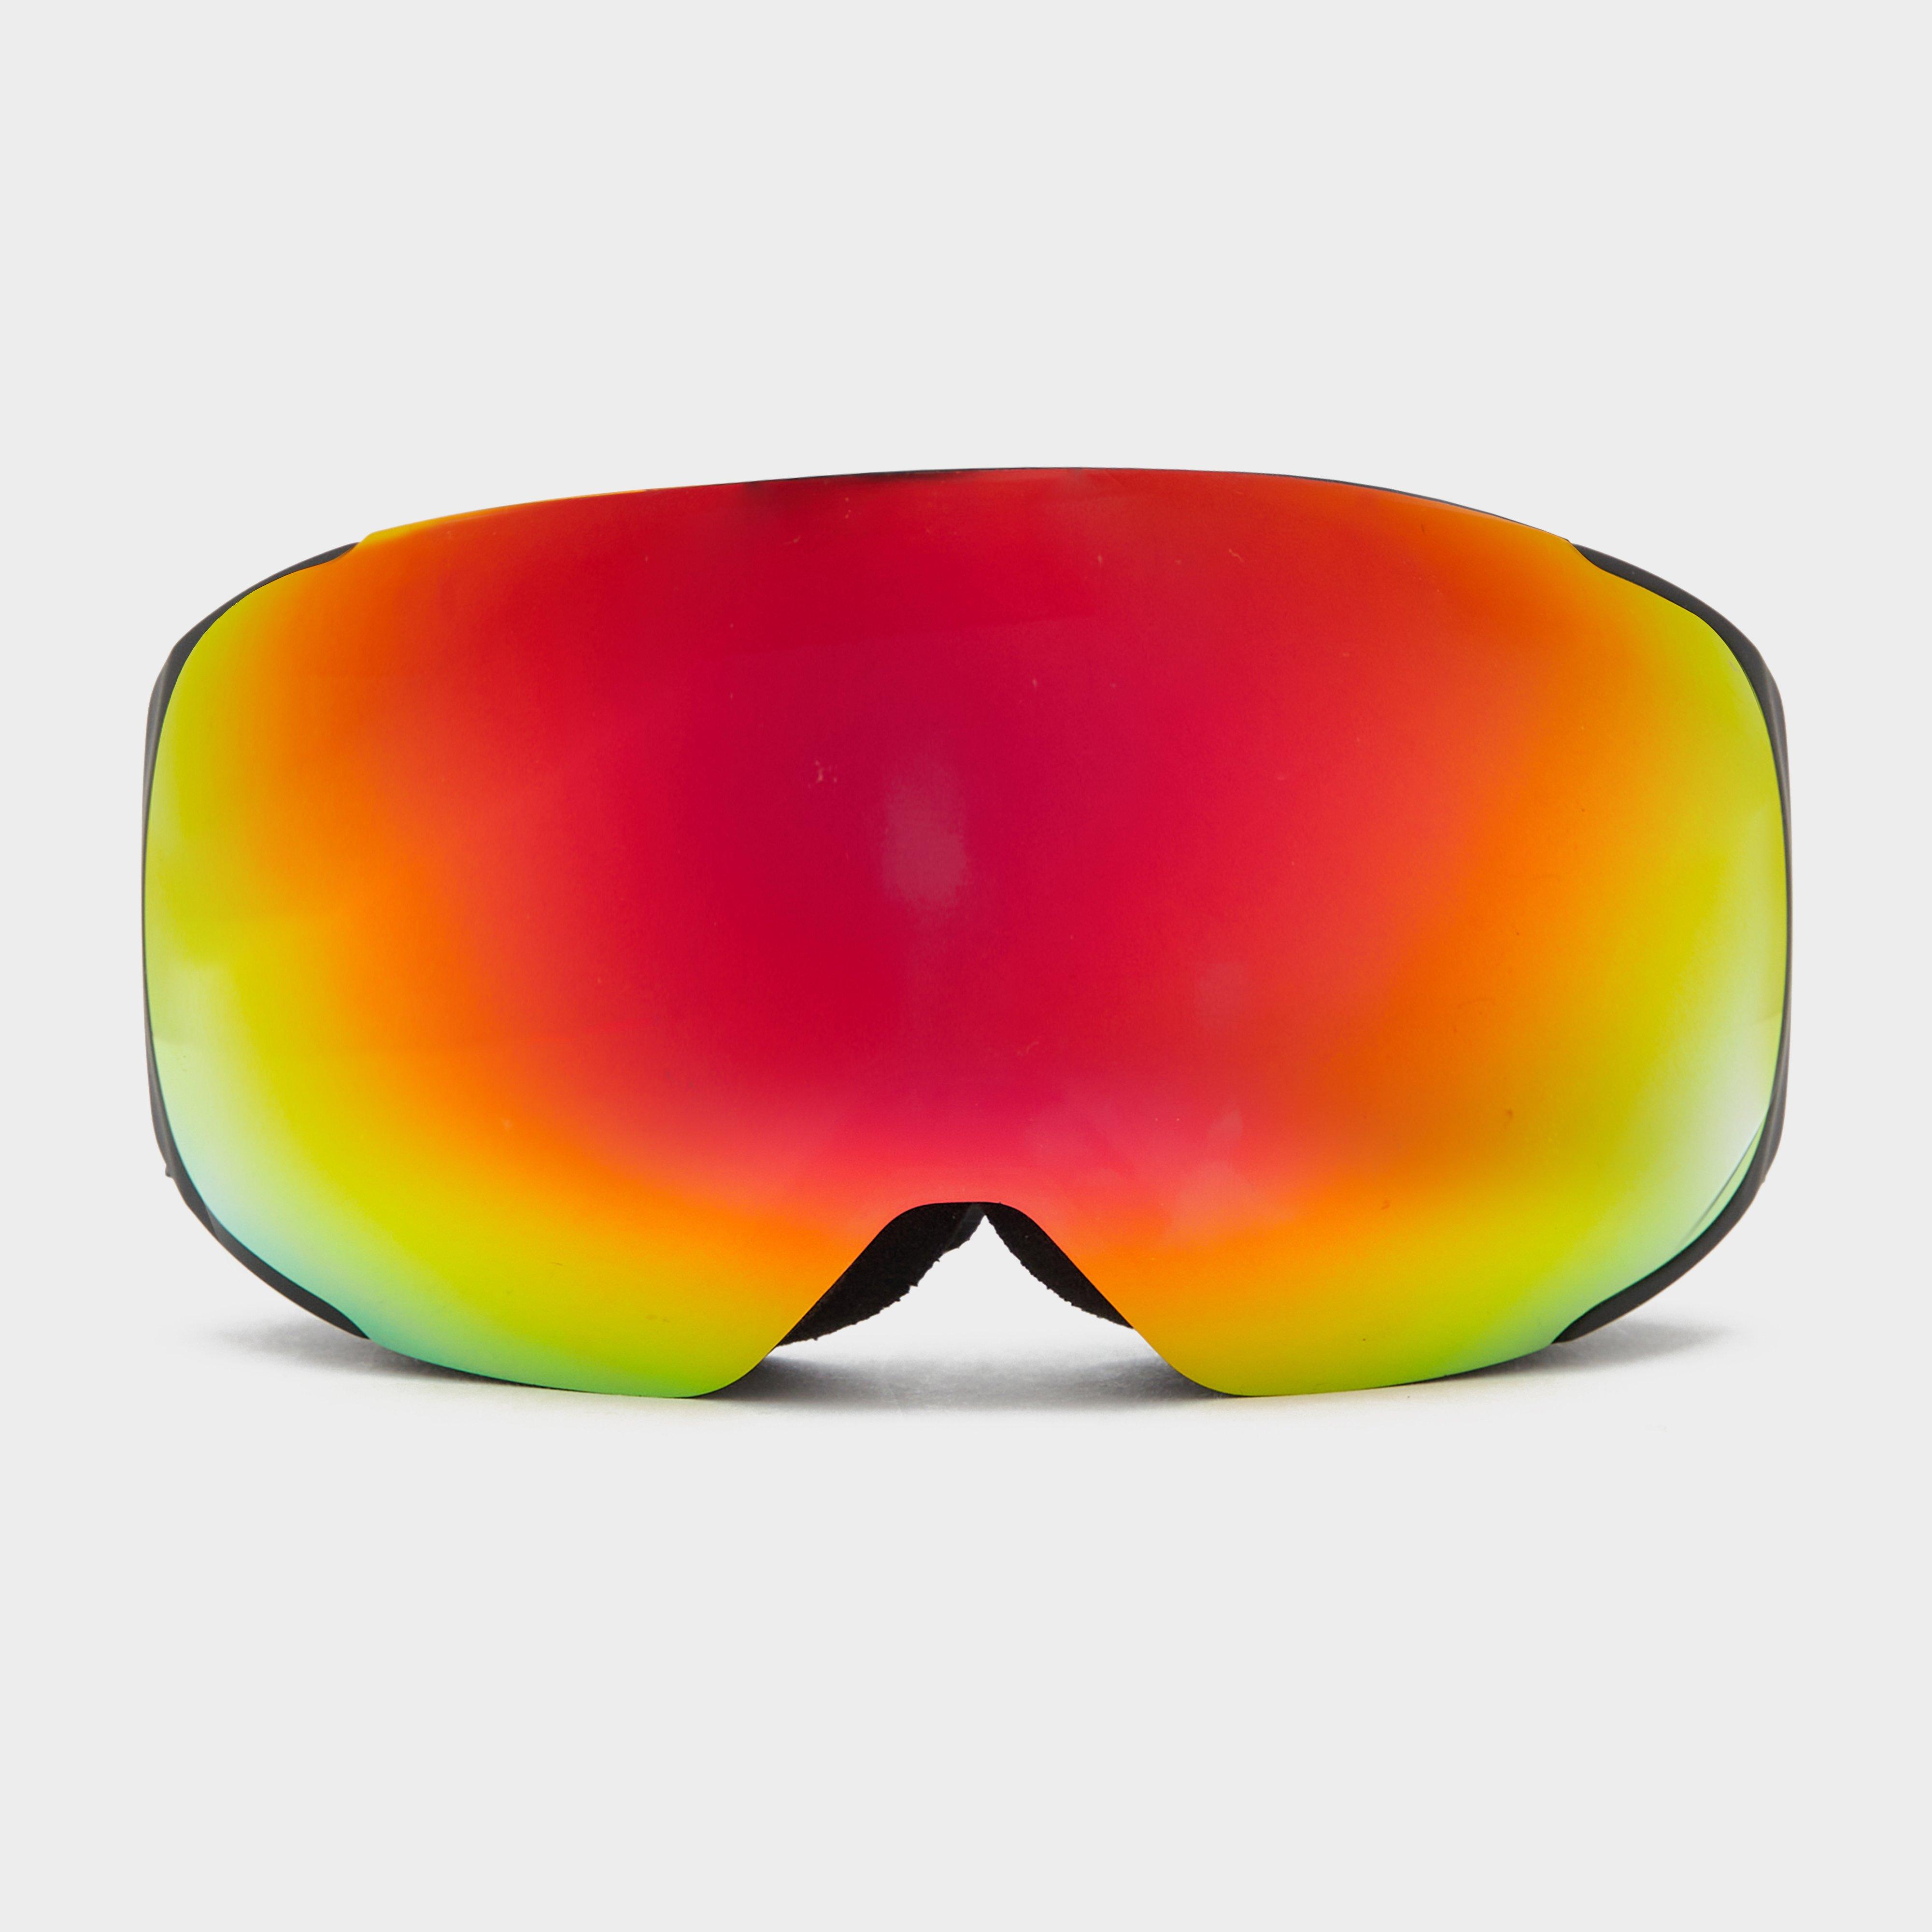  The Edge Twin Lens Piste Ski Goggles